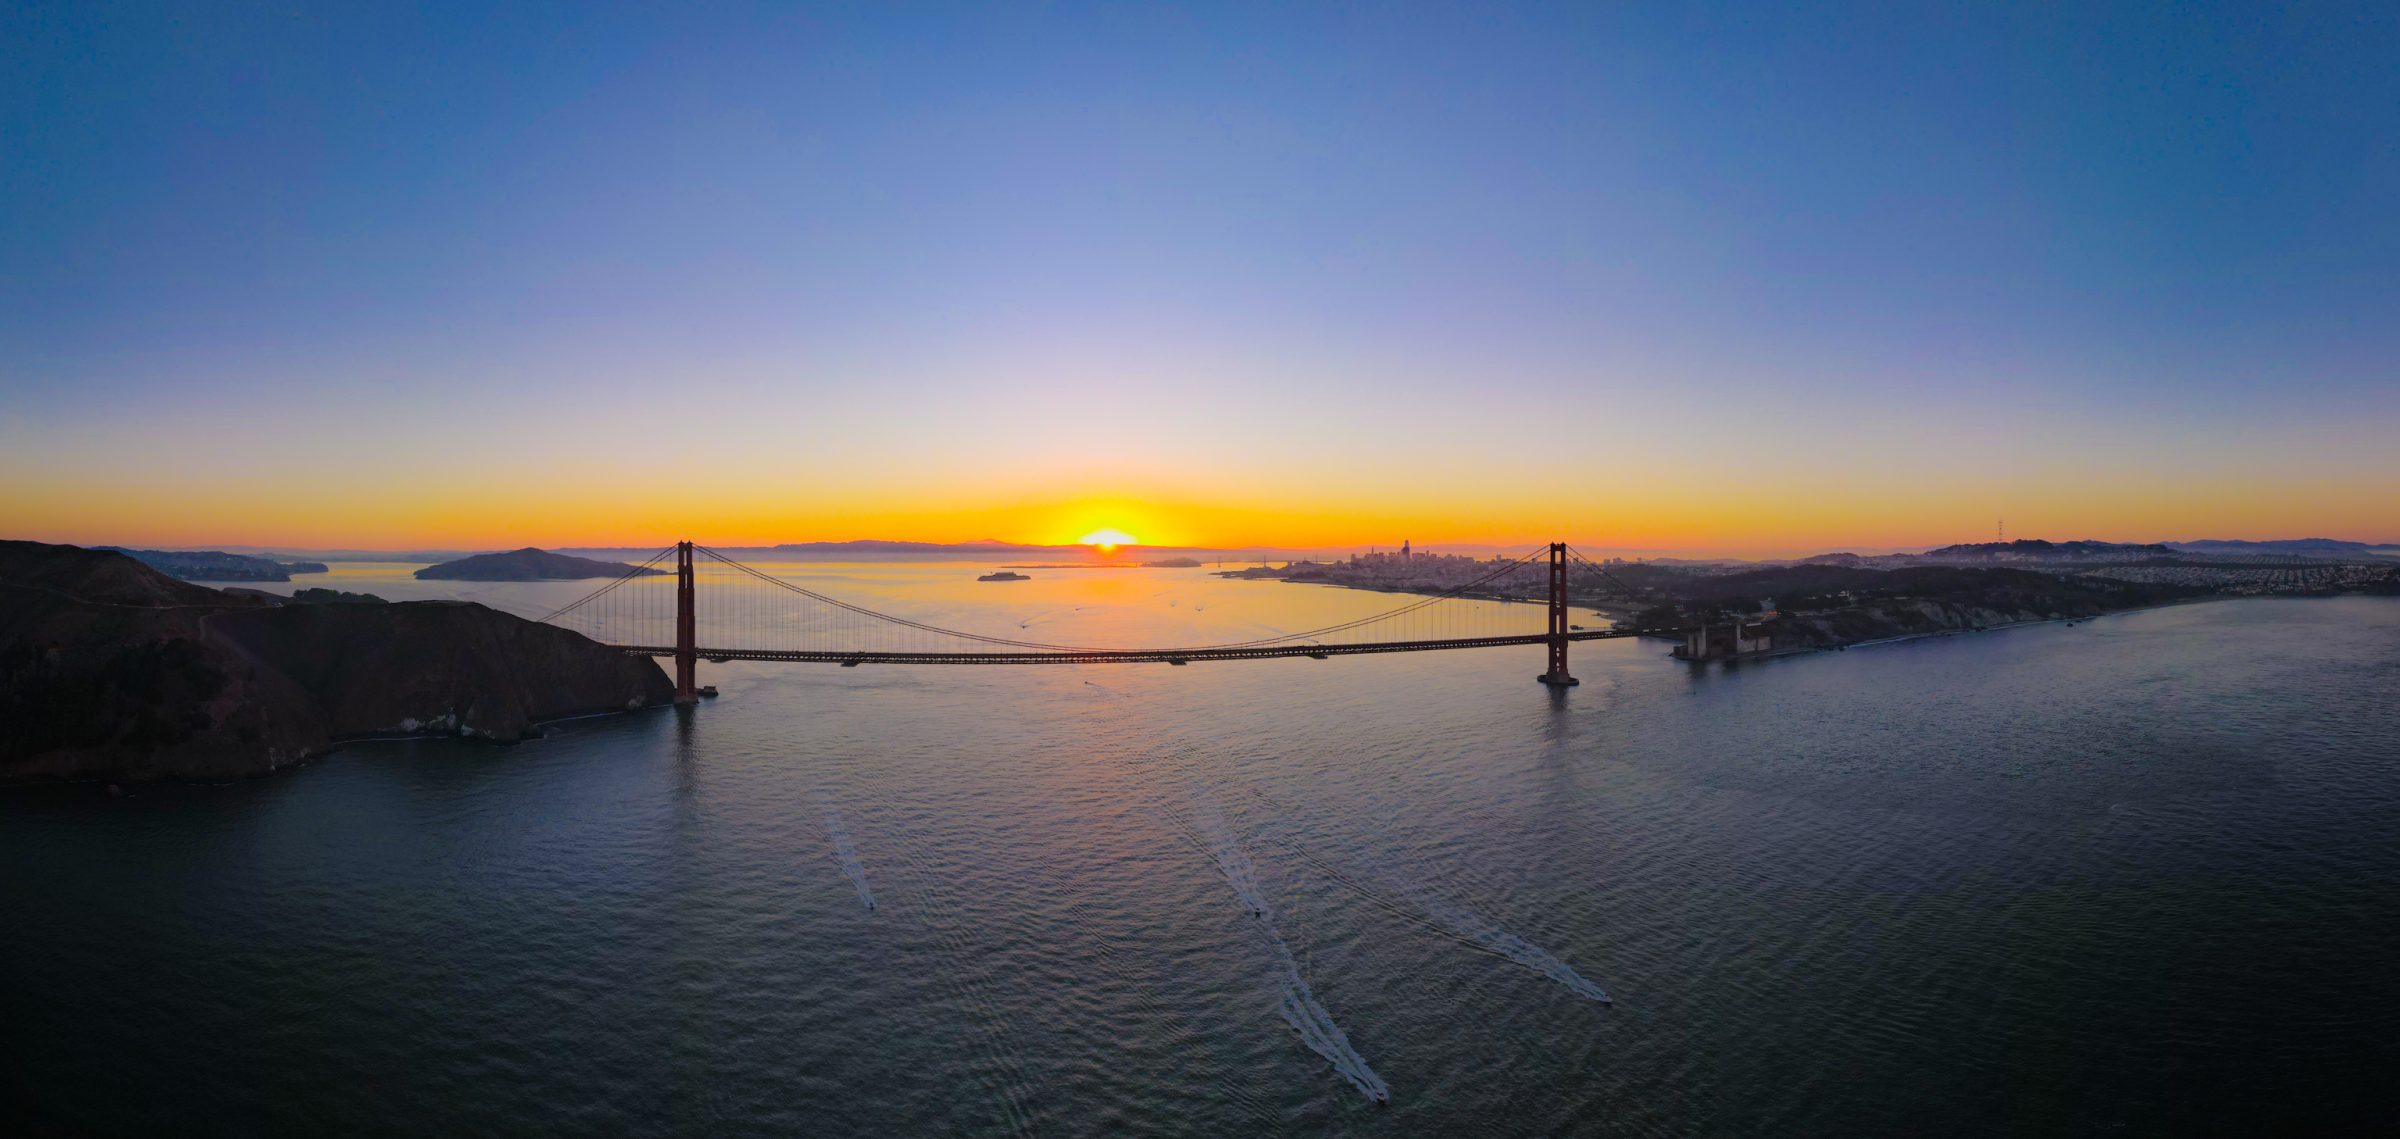 The Golden Gate Bridge and San Francisco at sunrise